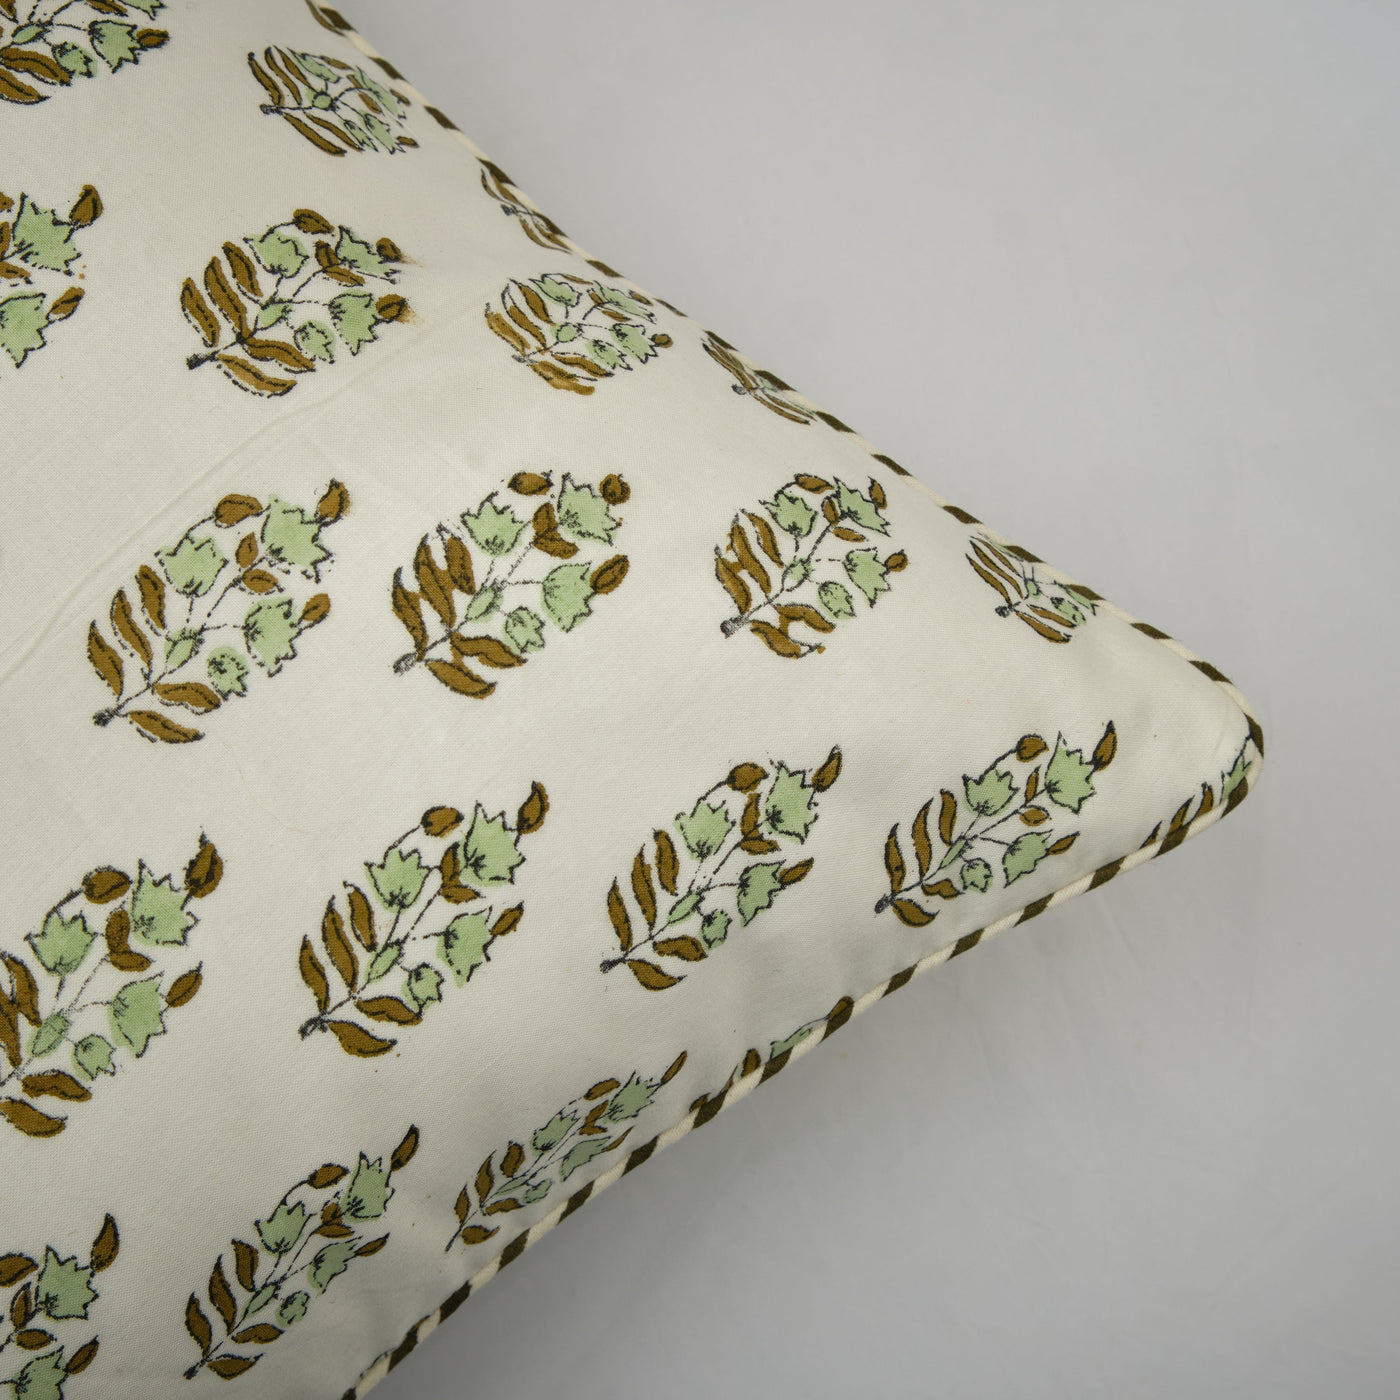 The Fabricrush  Pillowcases & Shams Green Boota Cushion Cover